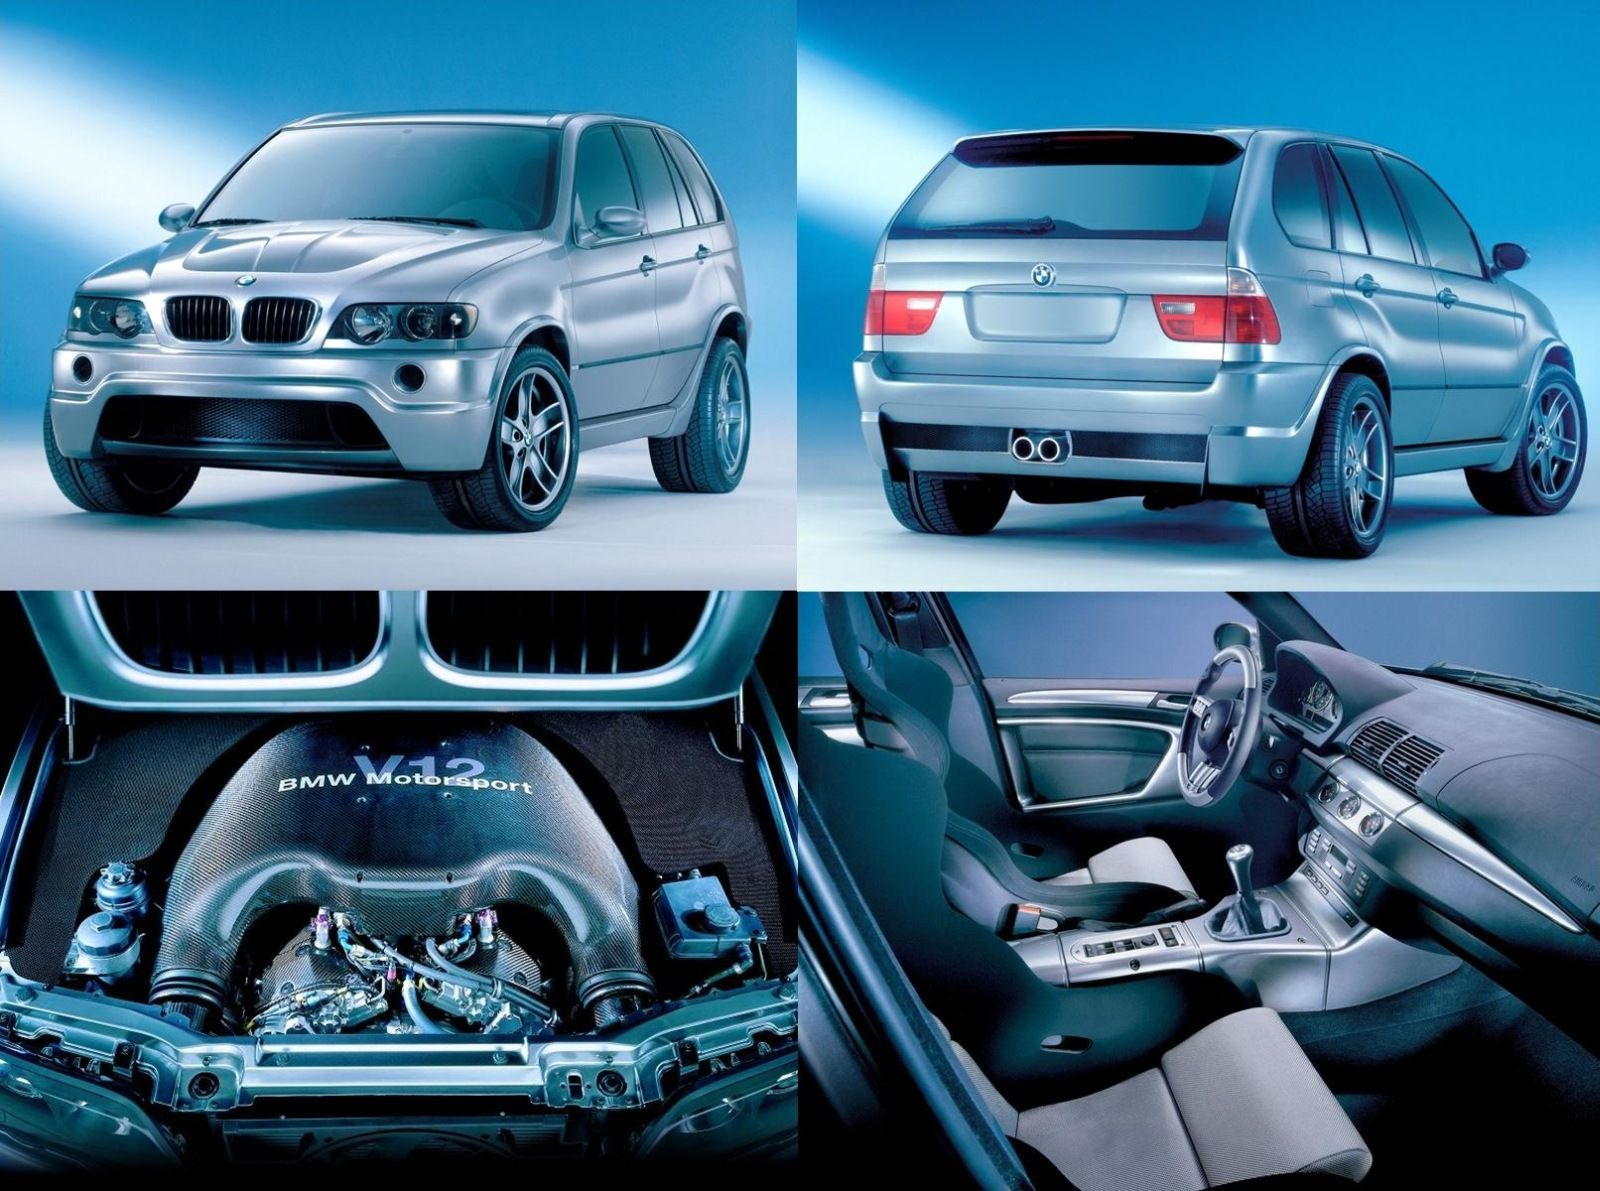 BMW X5 LM